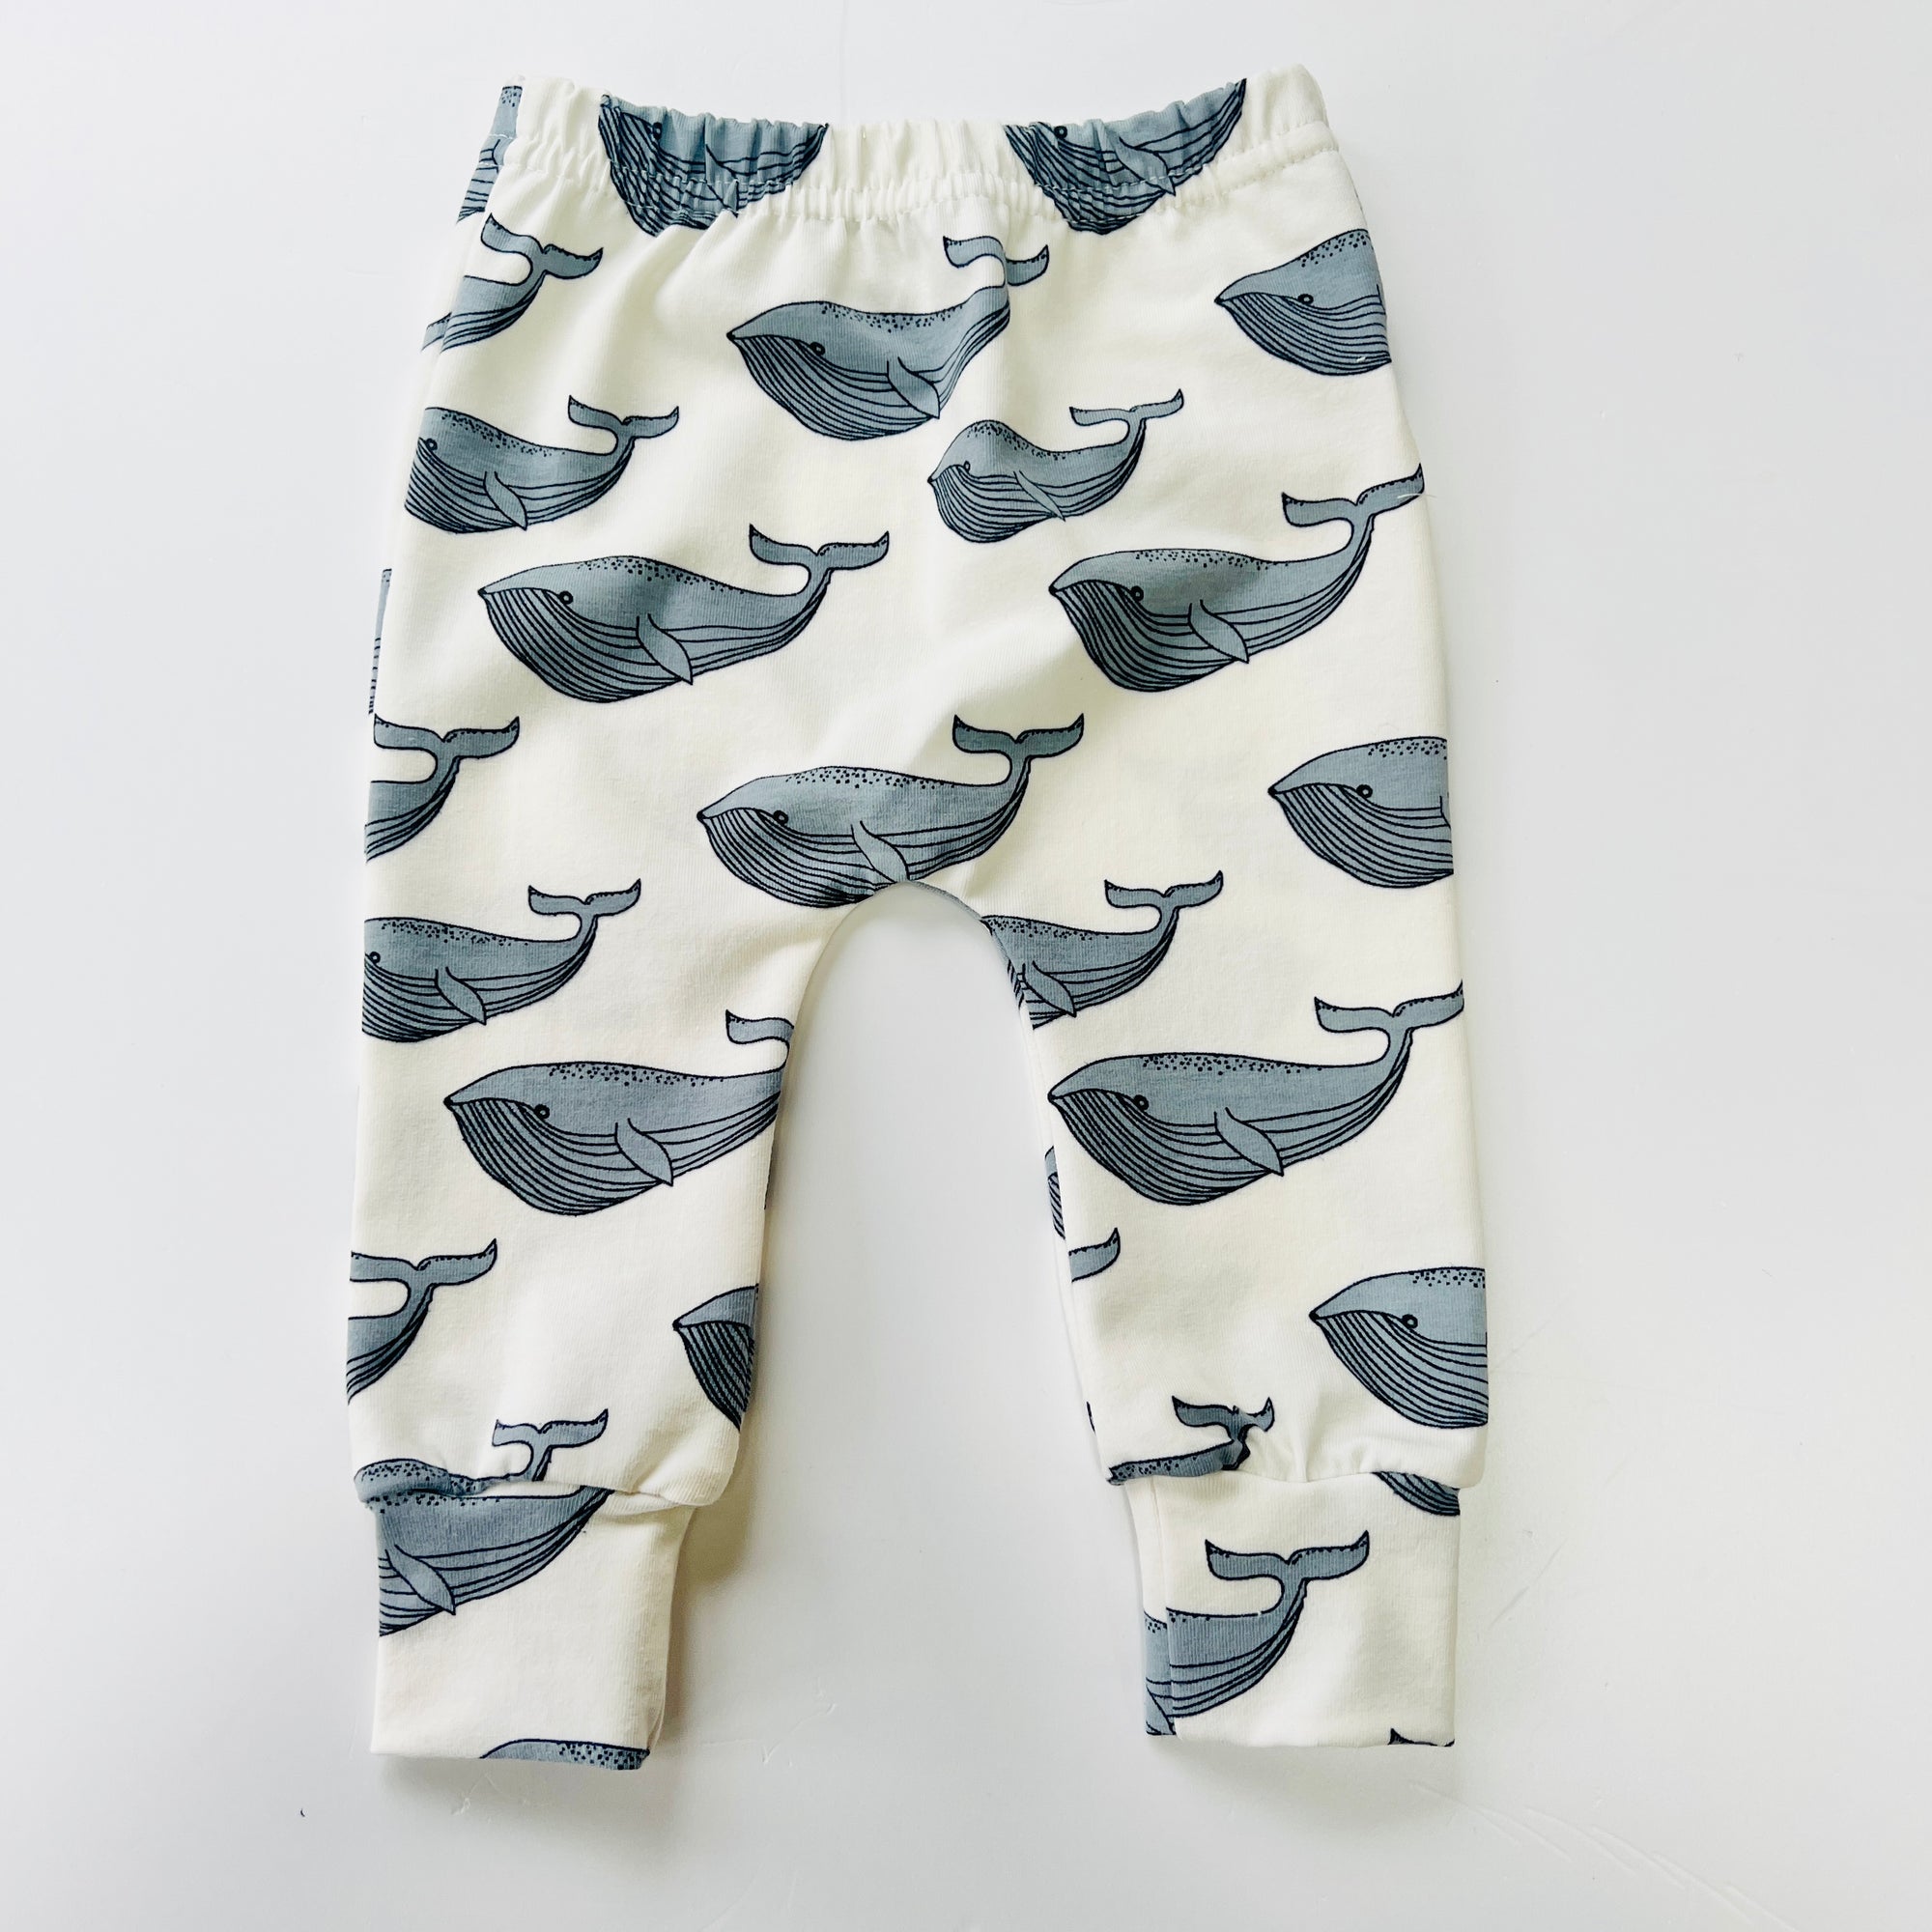 Eddie & Bee organic cotton leggings in cream “Whales" print.